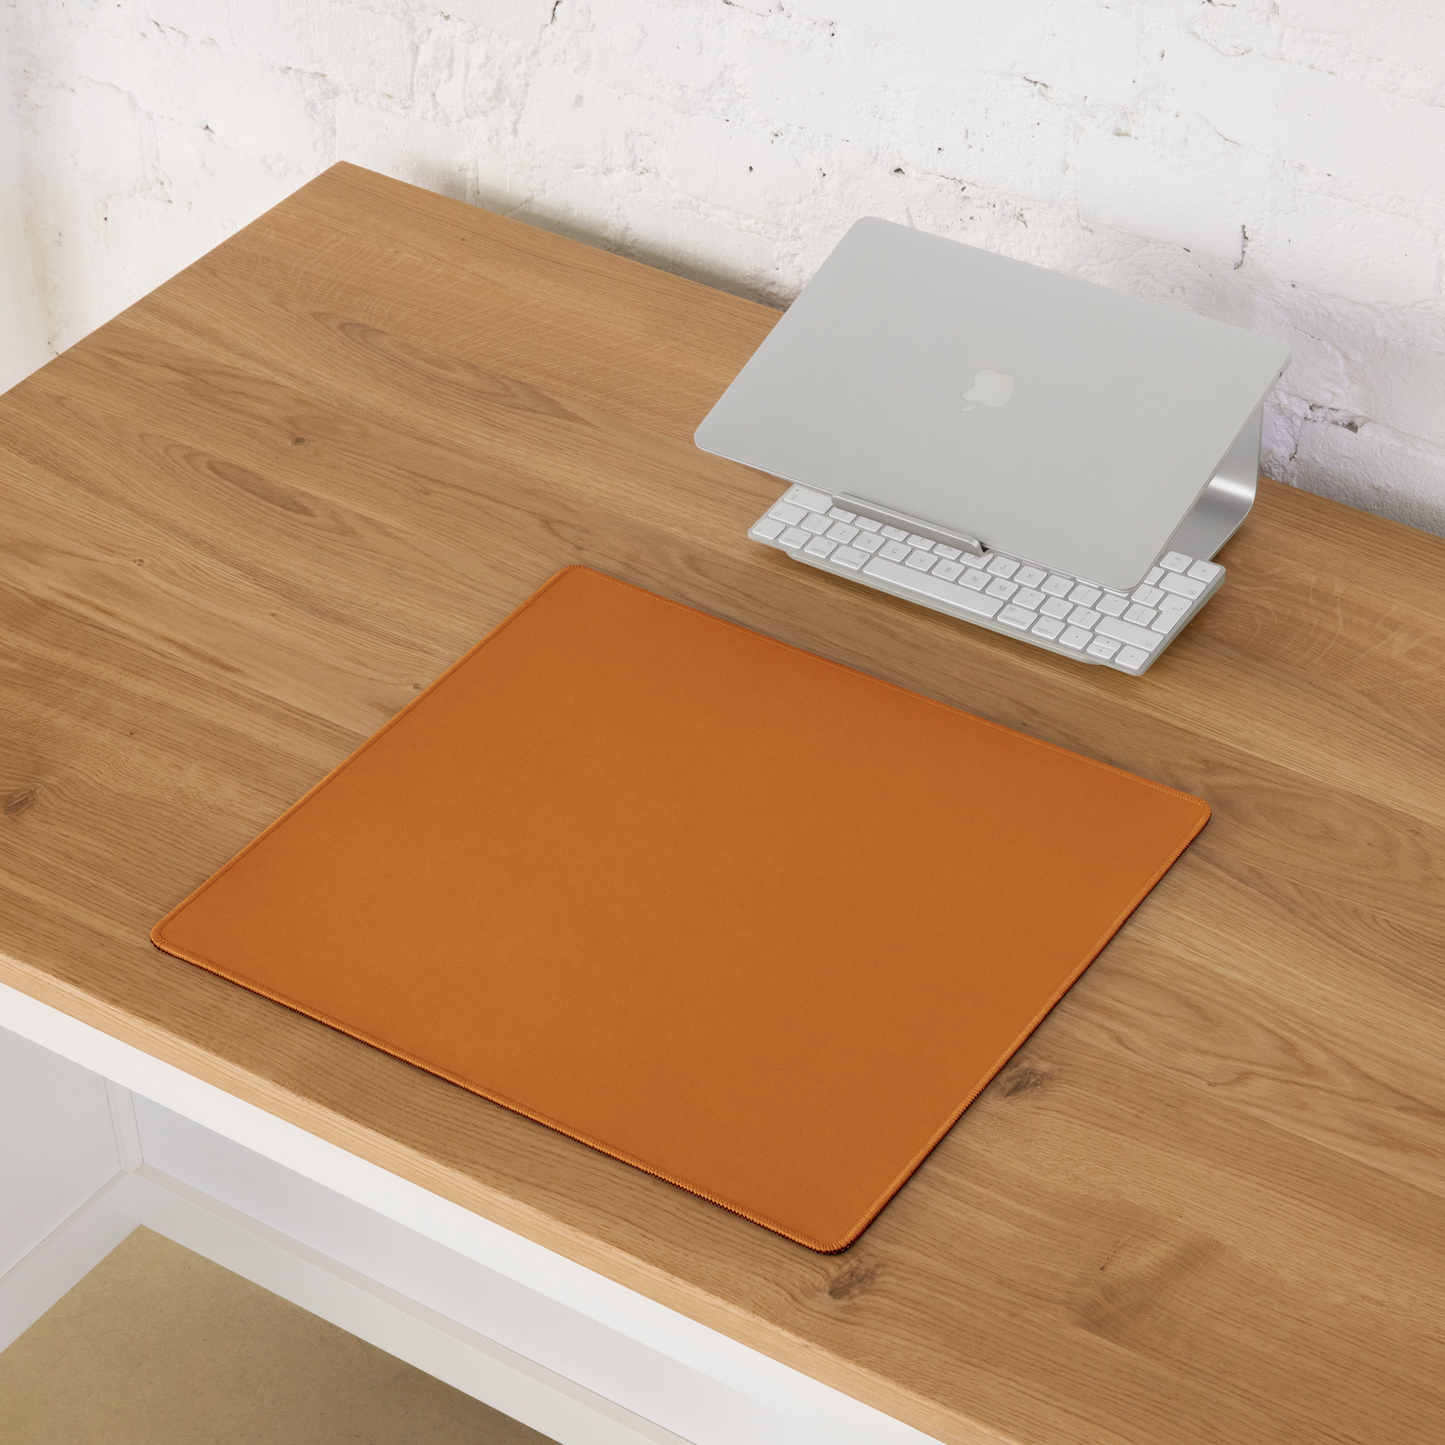 Orange Desk Pad -  Pantone 138